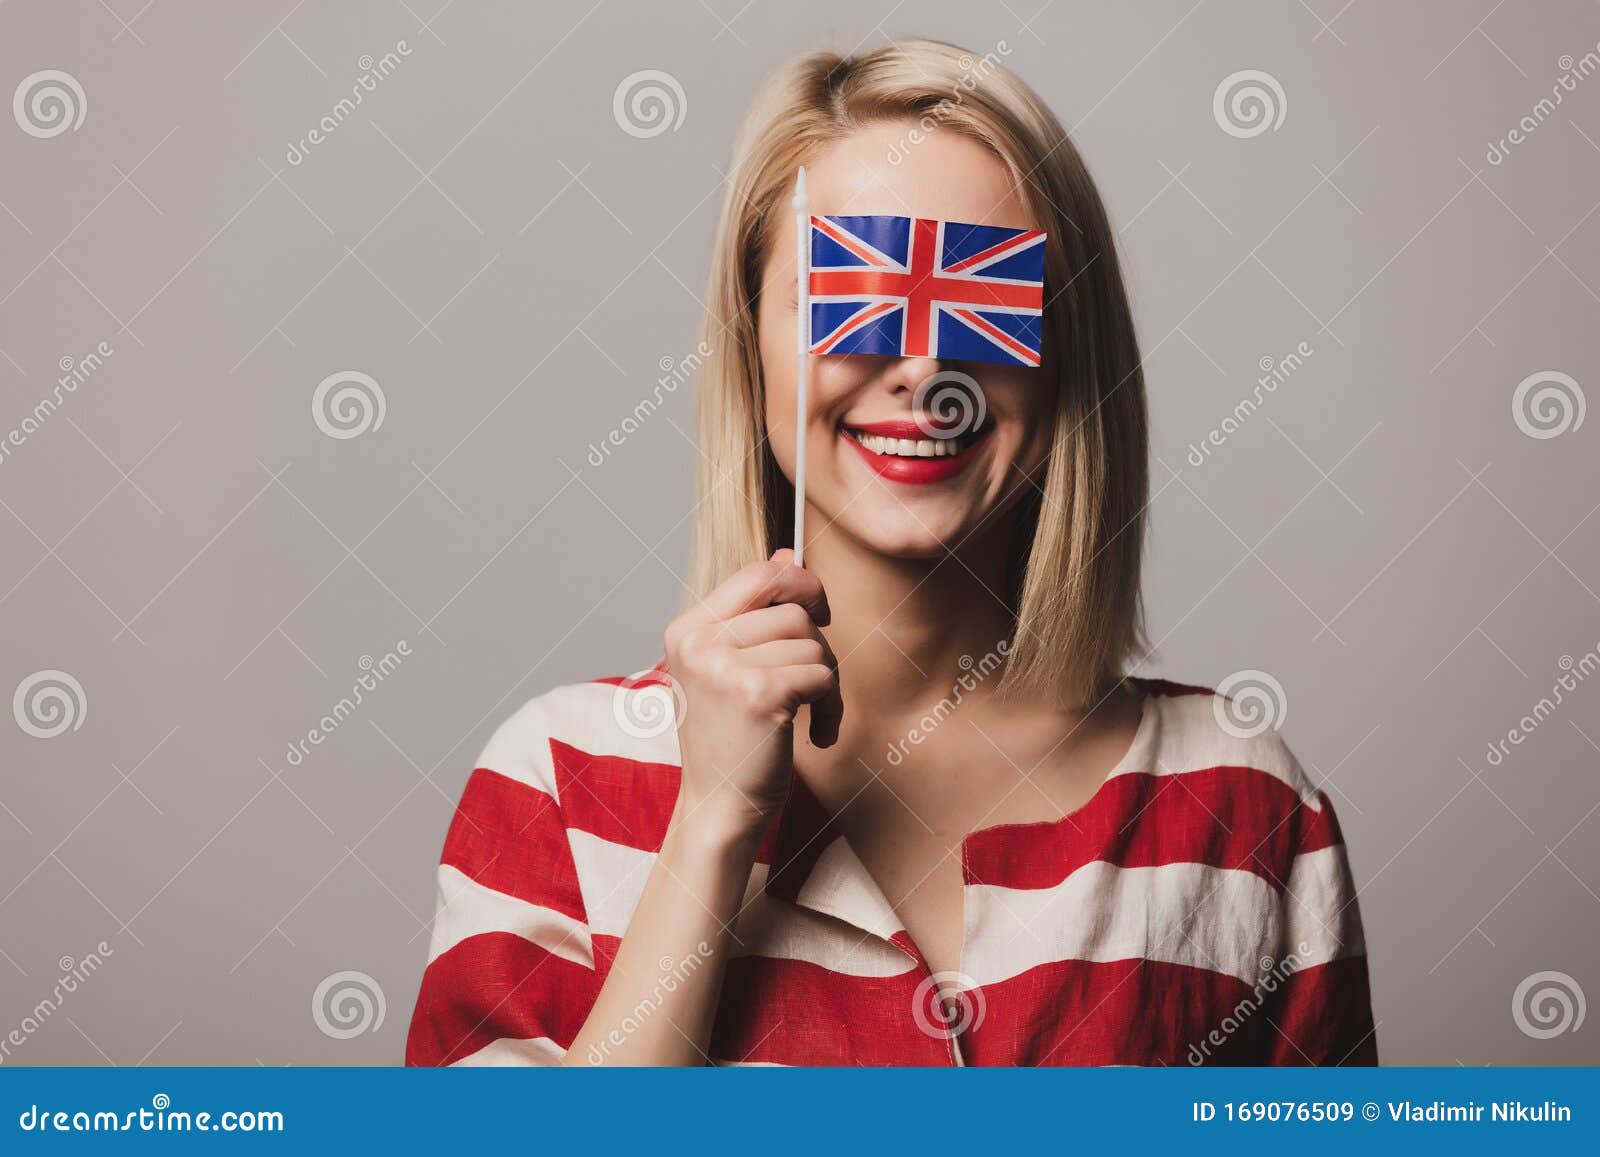 Girl Holds British Flag on Gray Background Stock Image - Image of ...